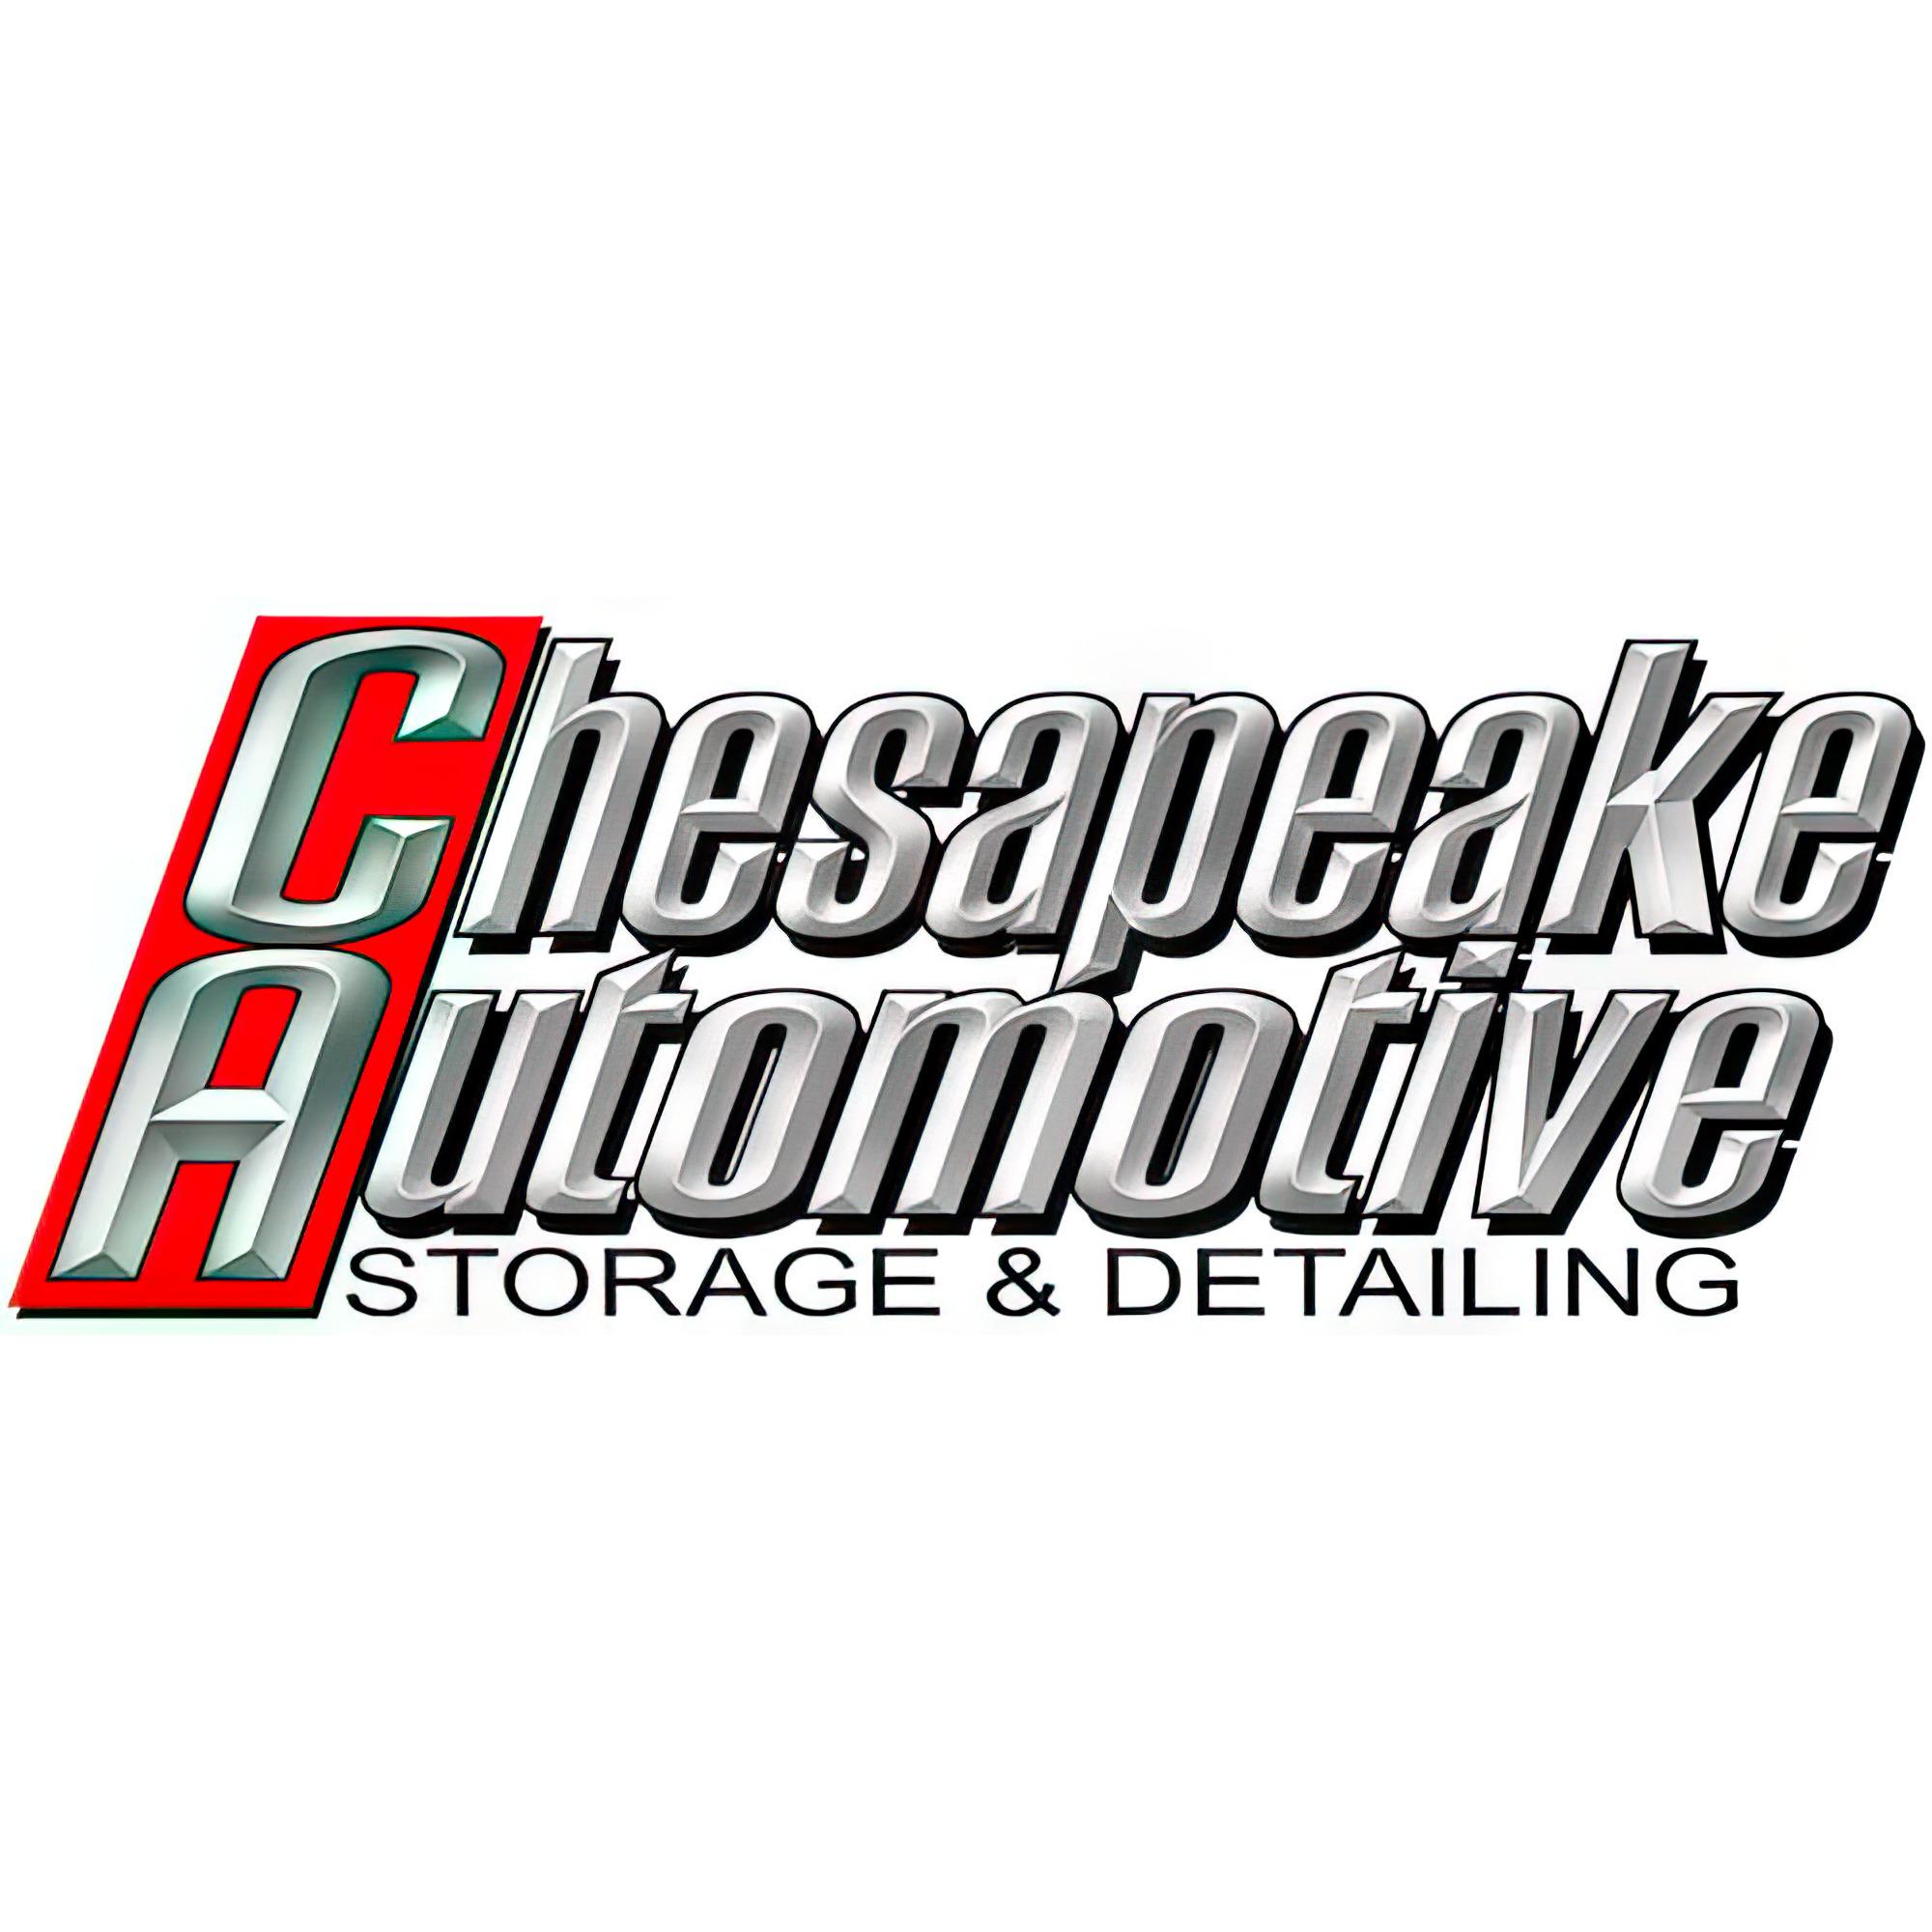 Chesapeake Automotive Storage and Detail